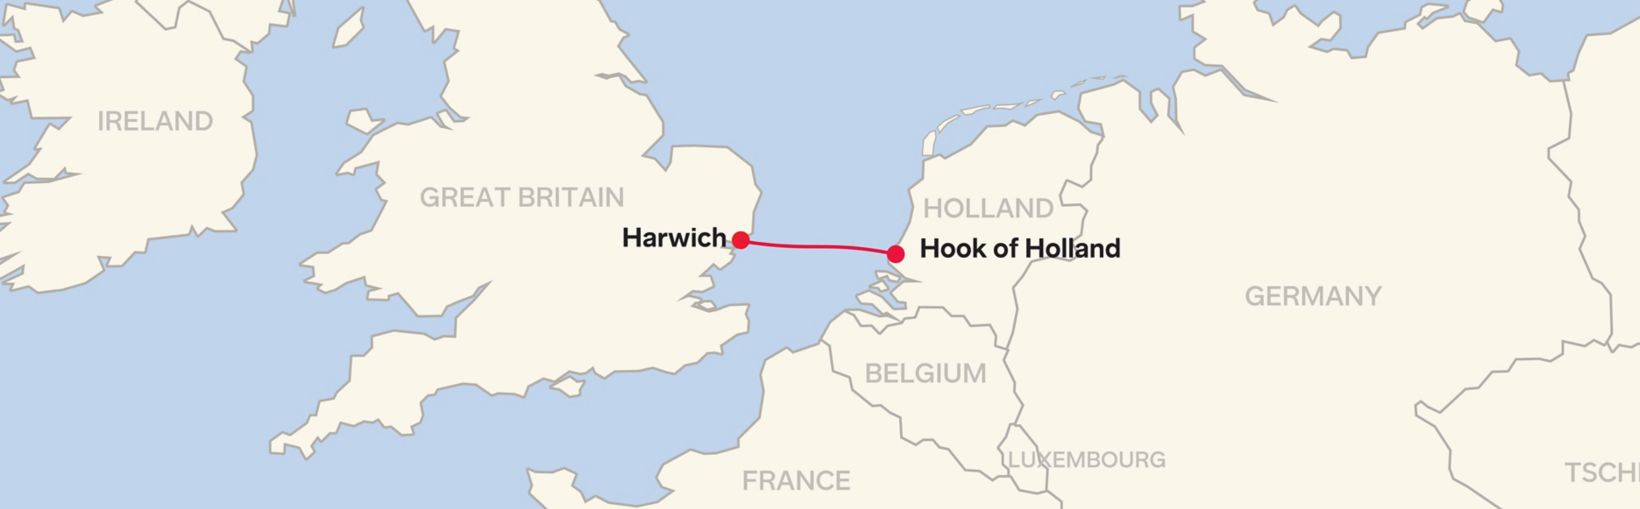 Mappa della rotta per Harwich - Hoek van Holland